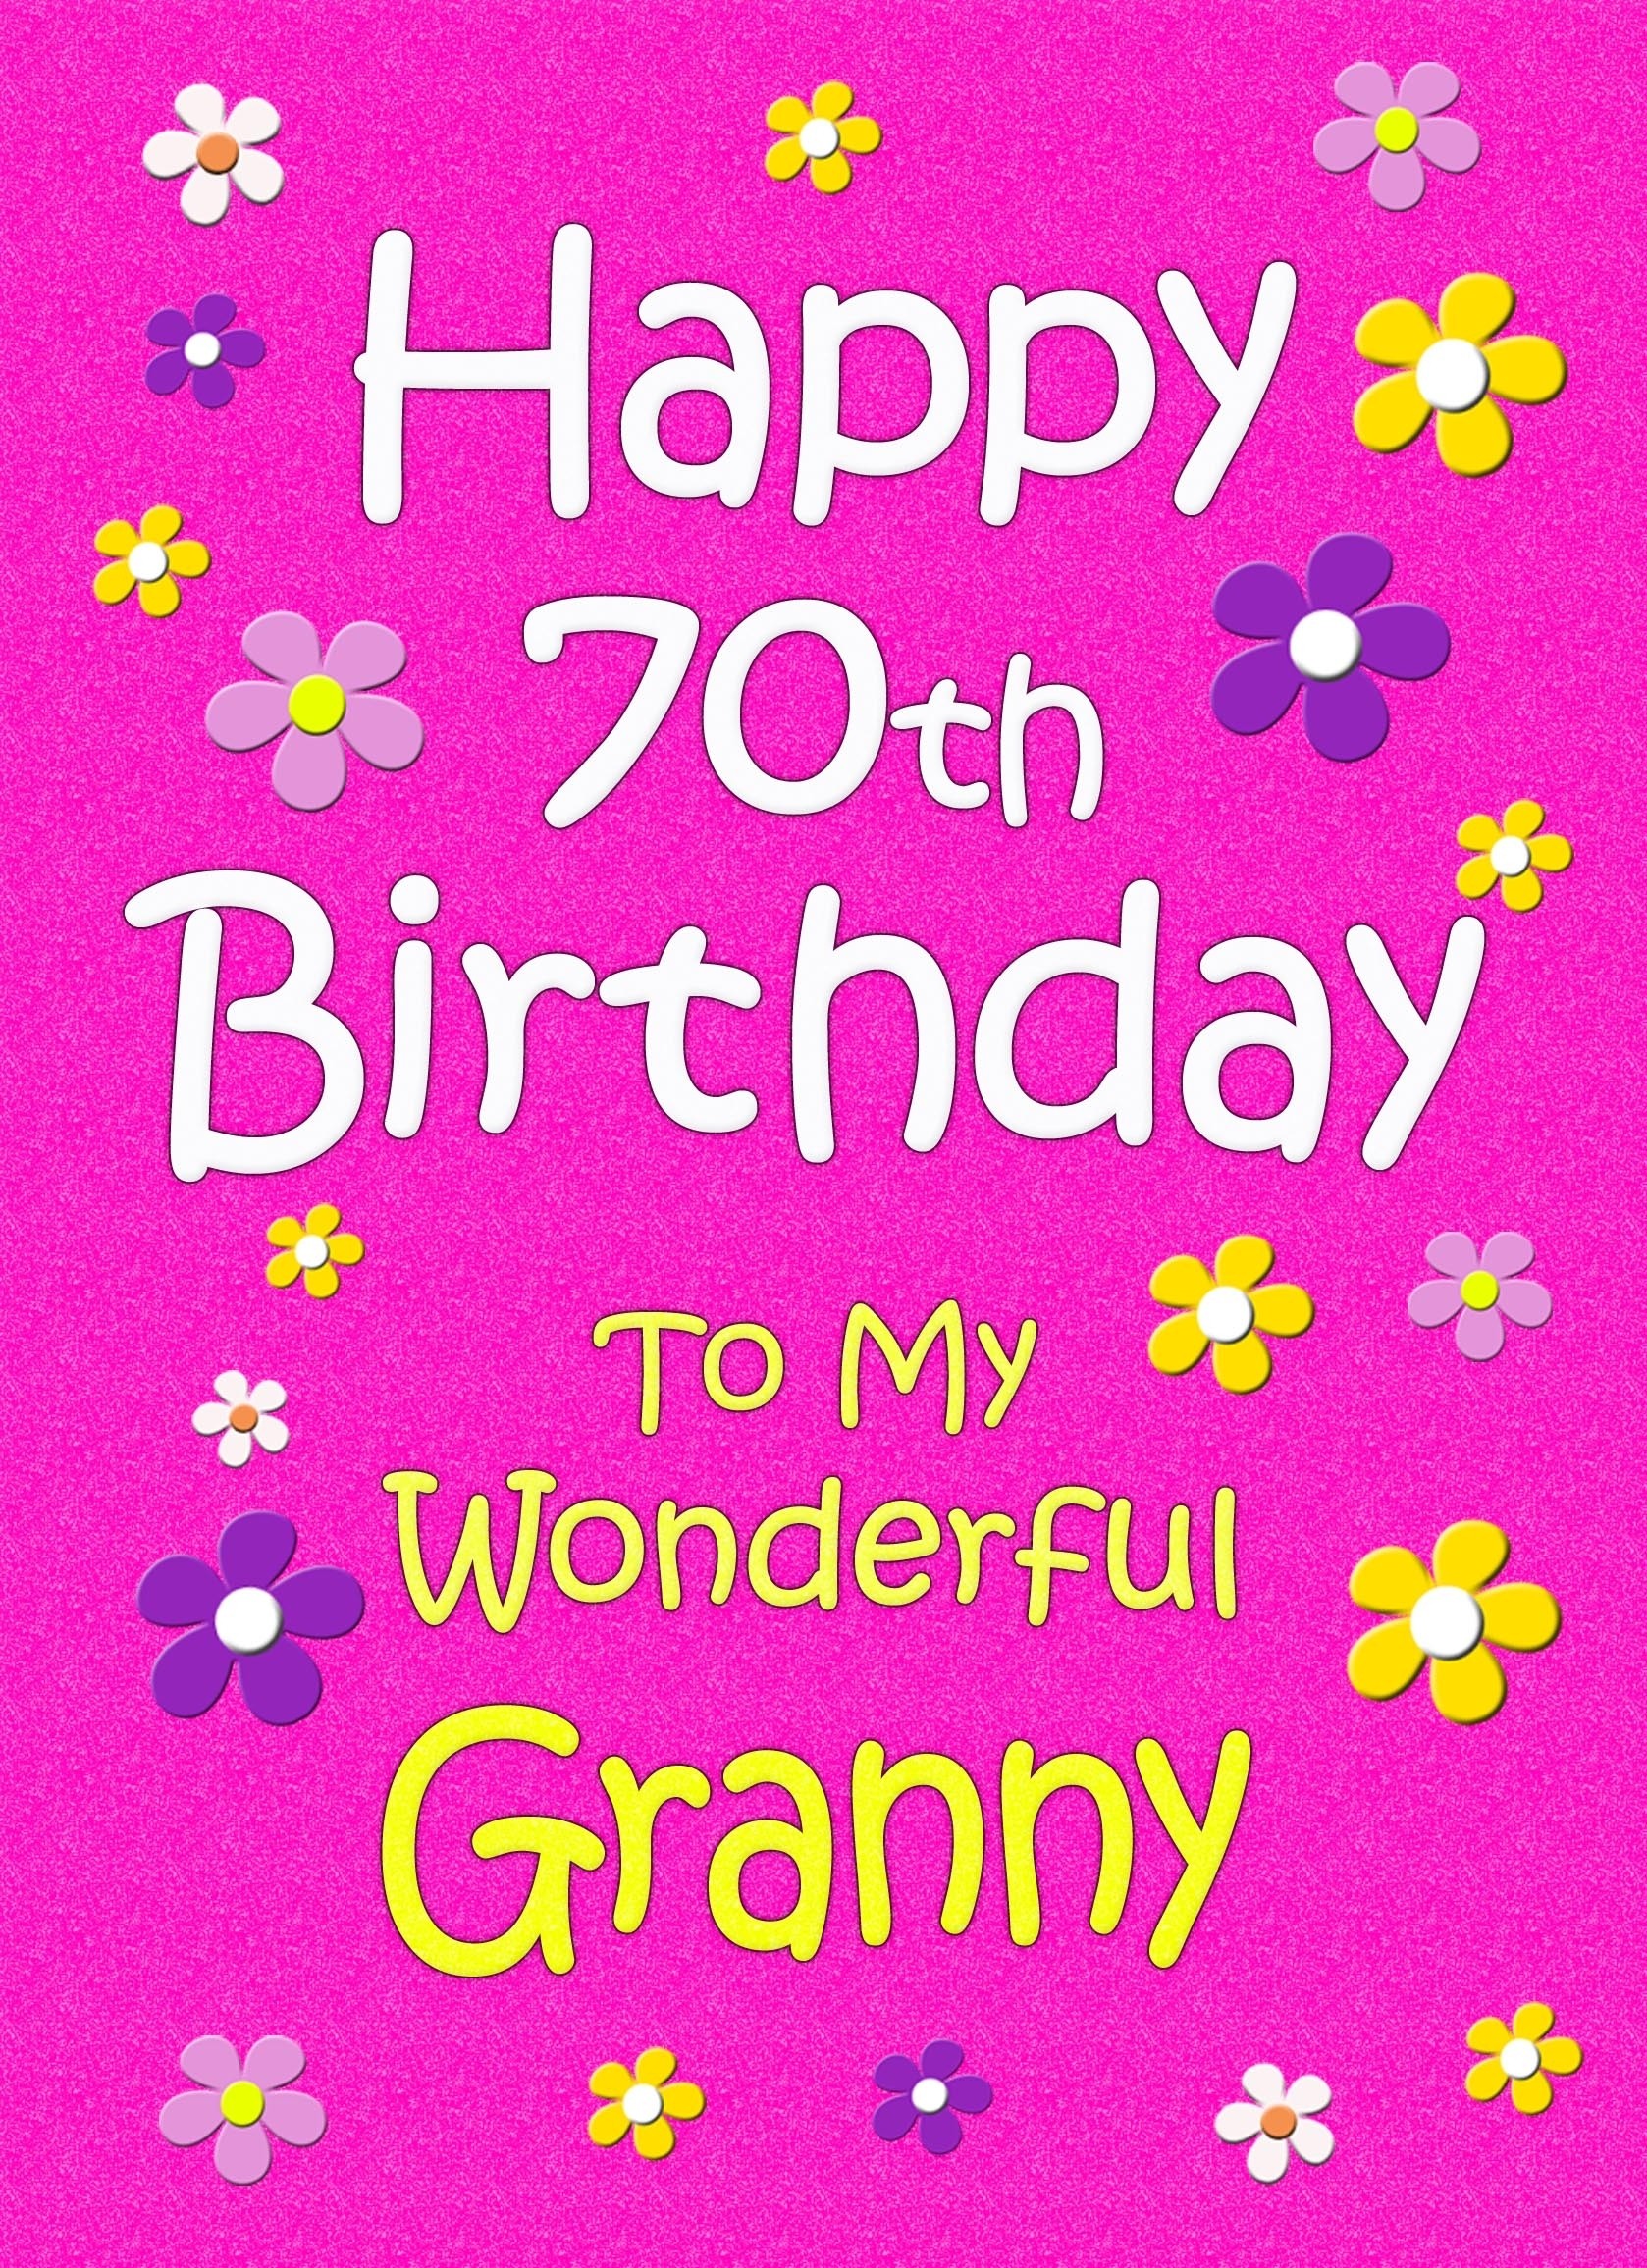 Granny 70th Birthday Card (Pink)